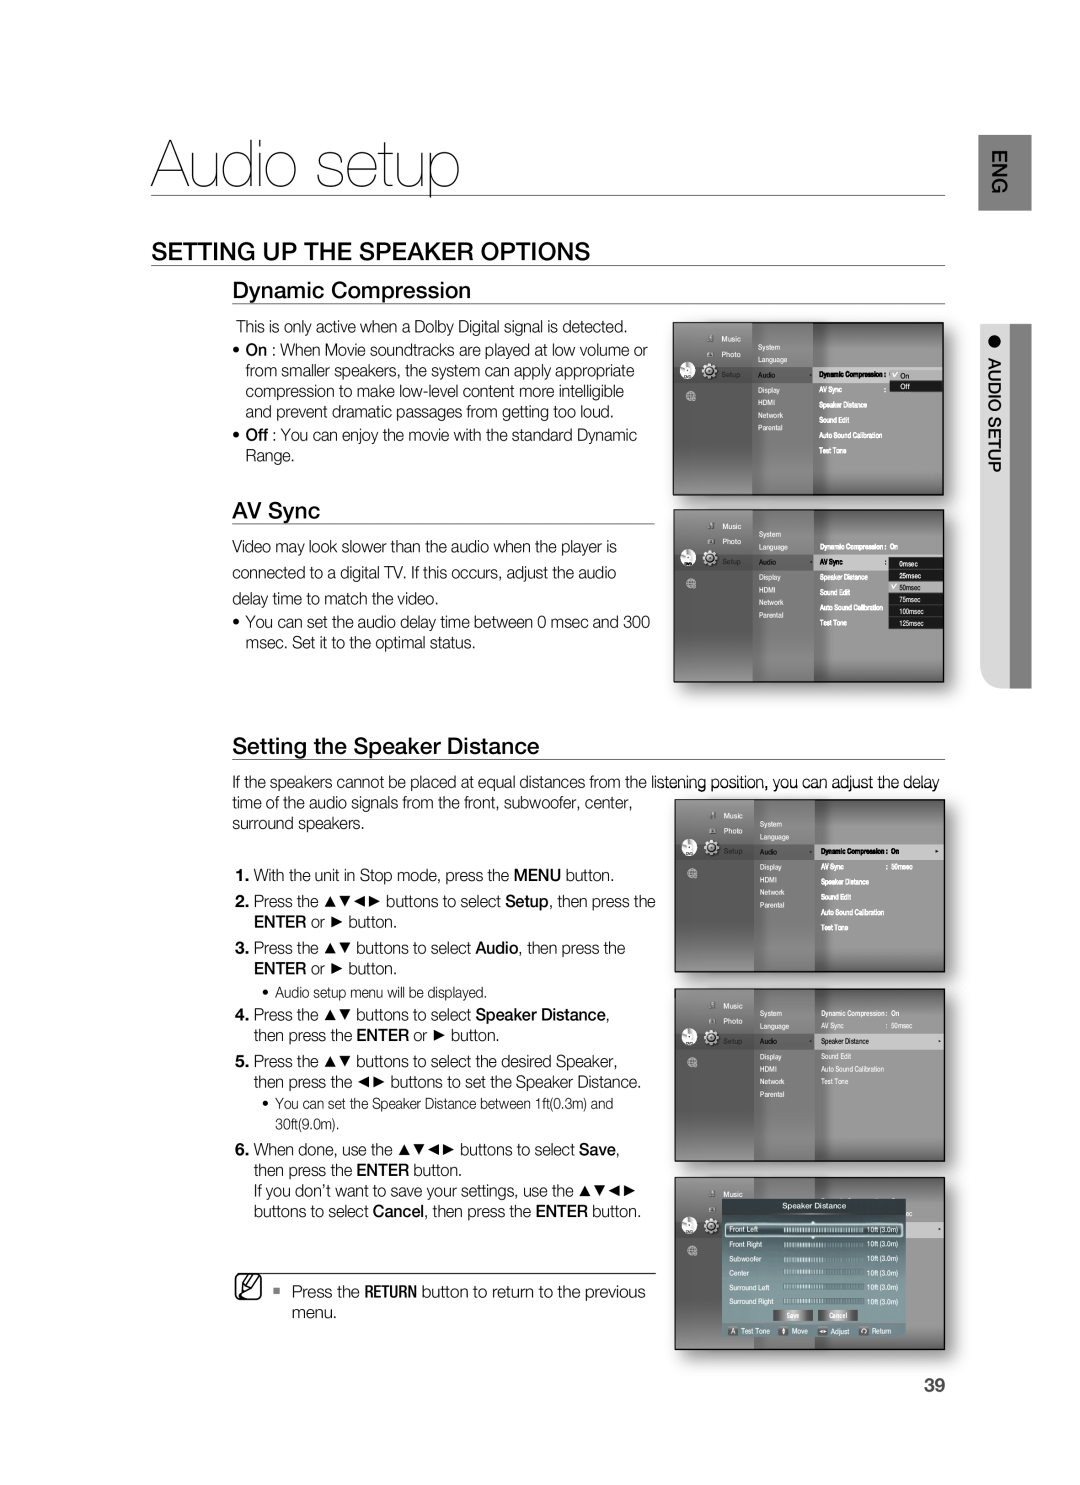 Samsung HT-BD3252 Audio setup, Setting Up The Speaker Options, Dynamic Compression, AV Sync, Setting the Speaker Distance 